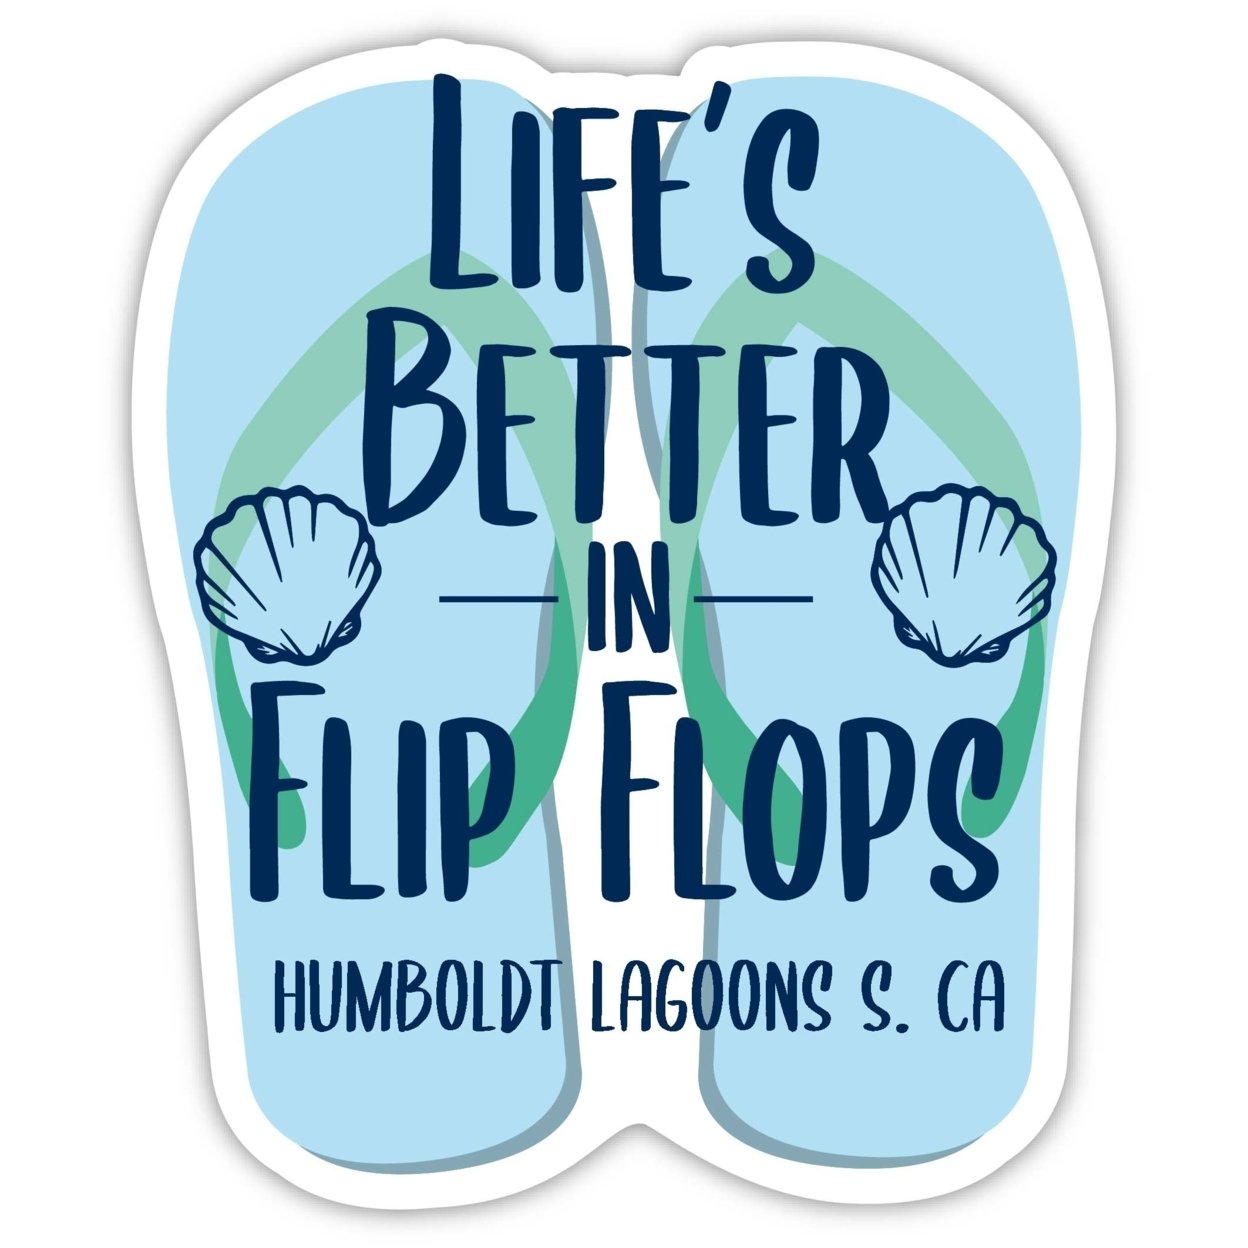 Humboldt Lagoons S California Souvenir 4 Inch Vinyl Decal Sticker Flip Flop Design